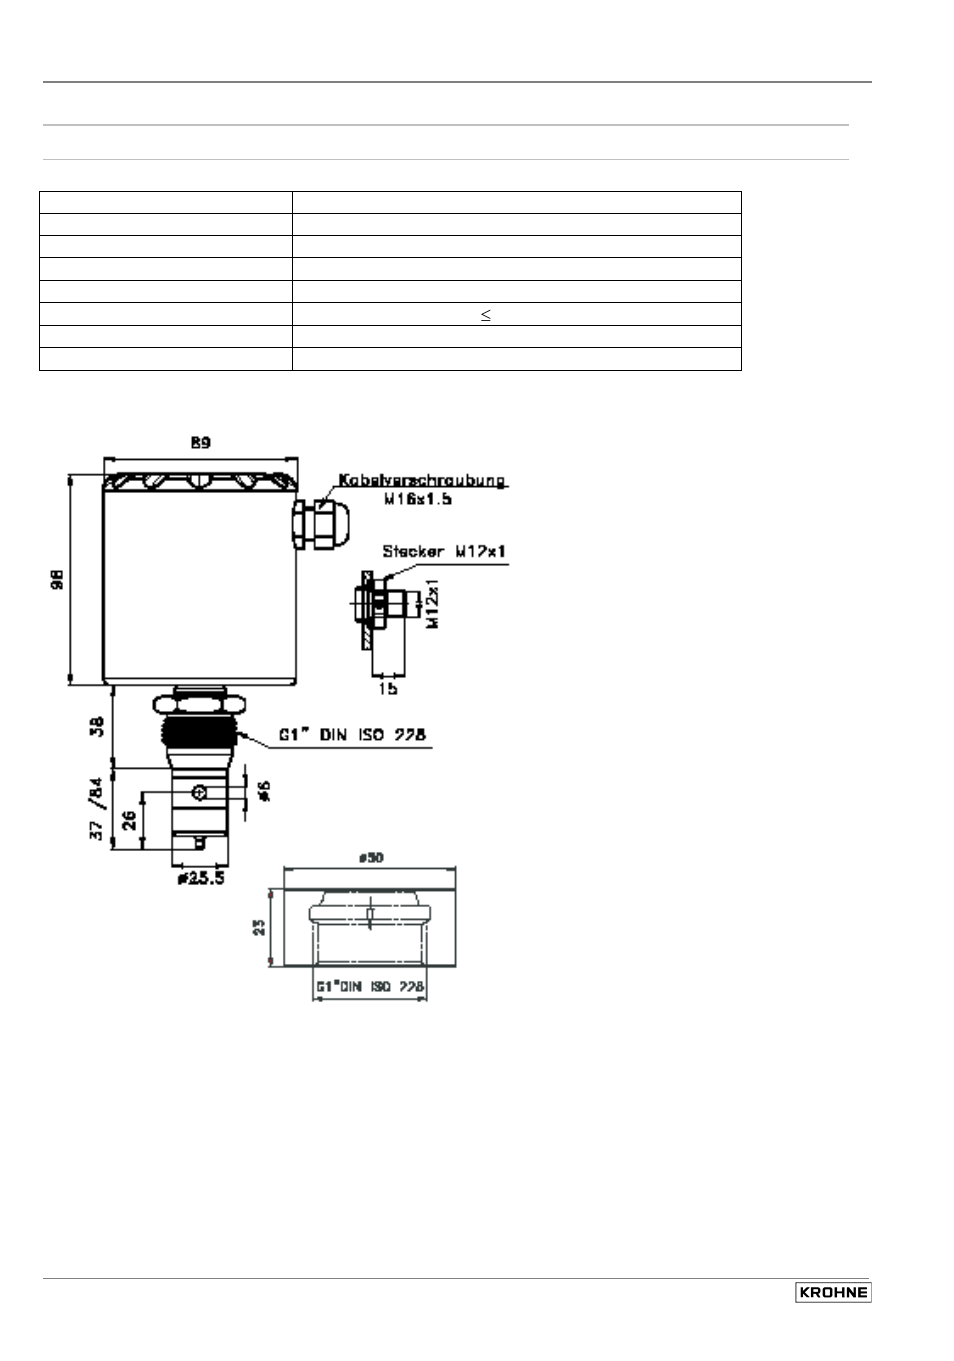 KROHNE ACM 500 EN User Manual | Page 14 / 19 | Original mode